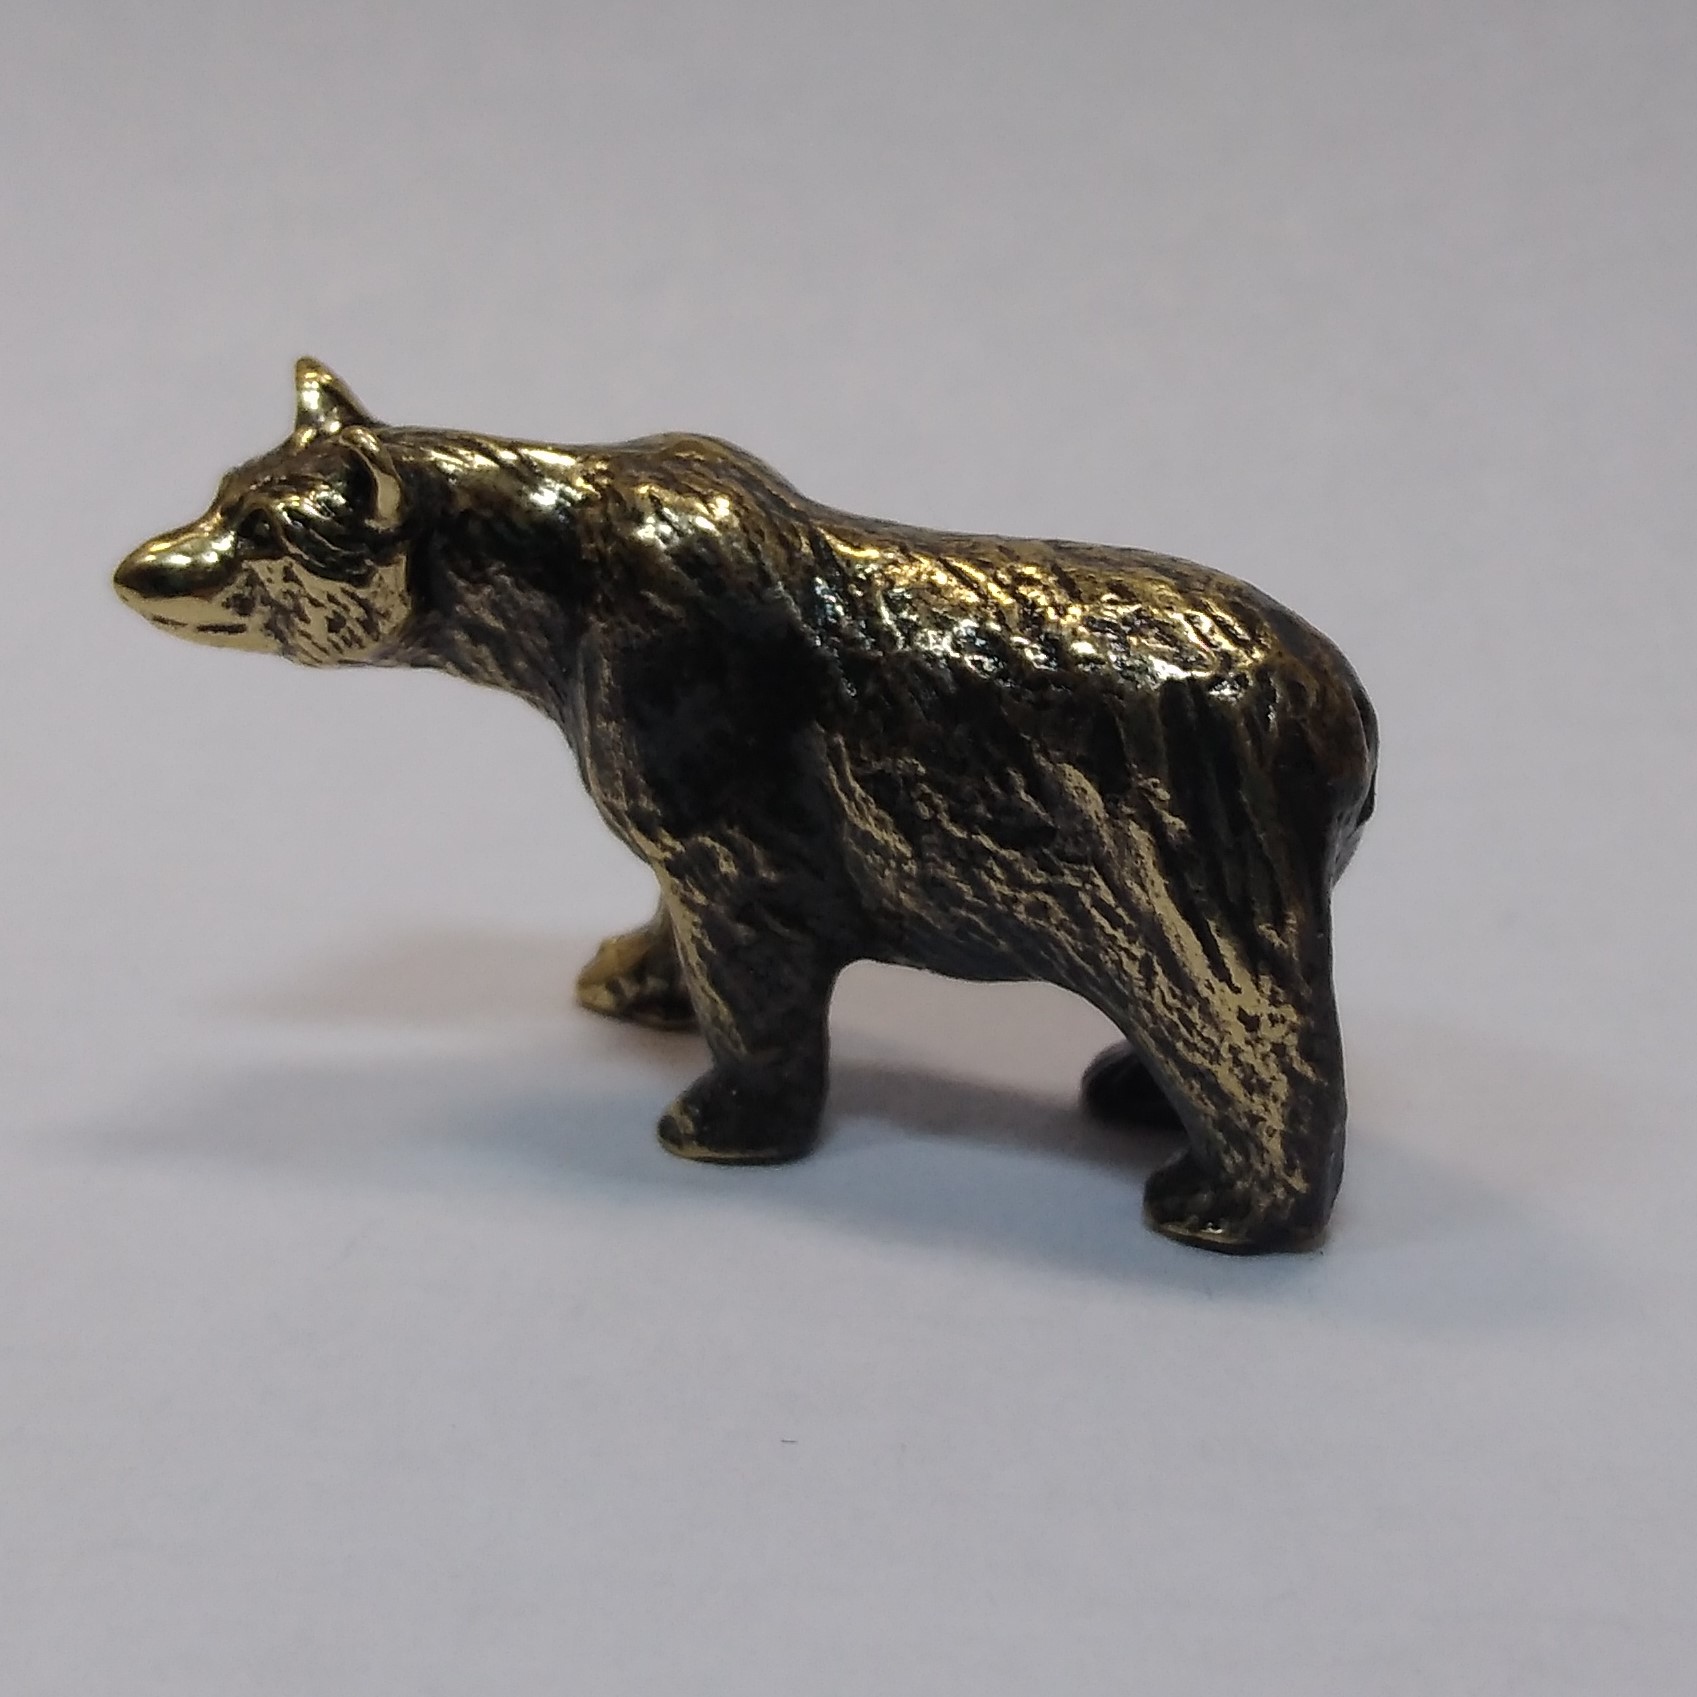 Бронзовая статуэтка Медведь бурыйФото 21697-03.jpg